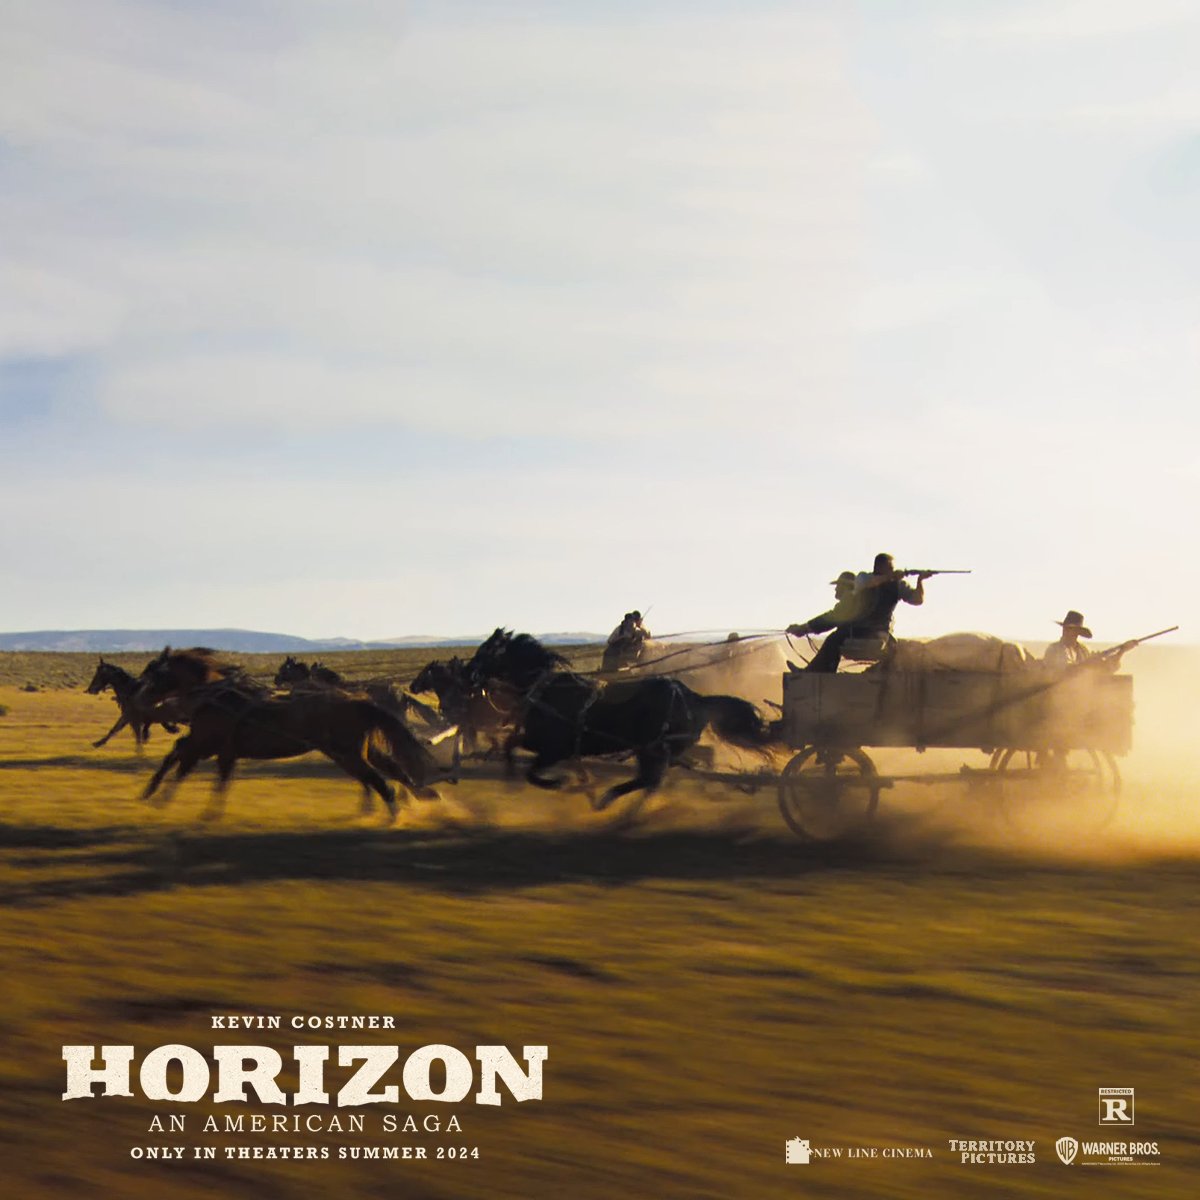 Kevin Costner's #HorizonAmericanSaga begins this Summer.